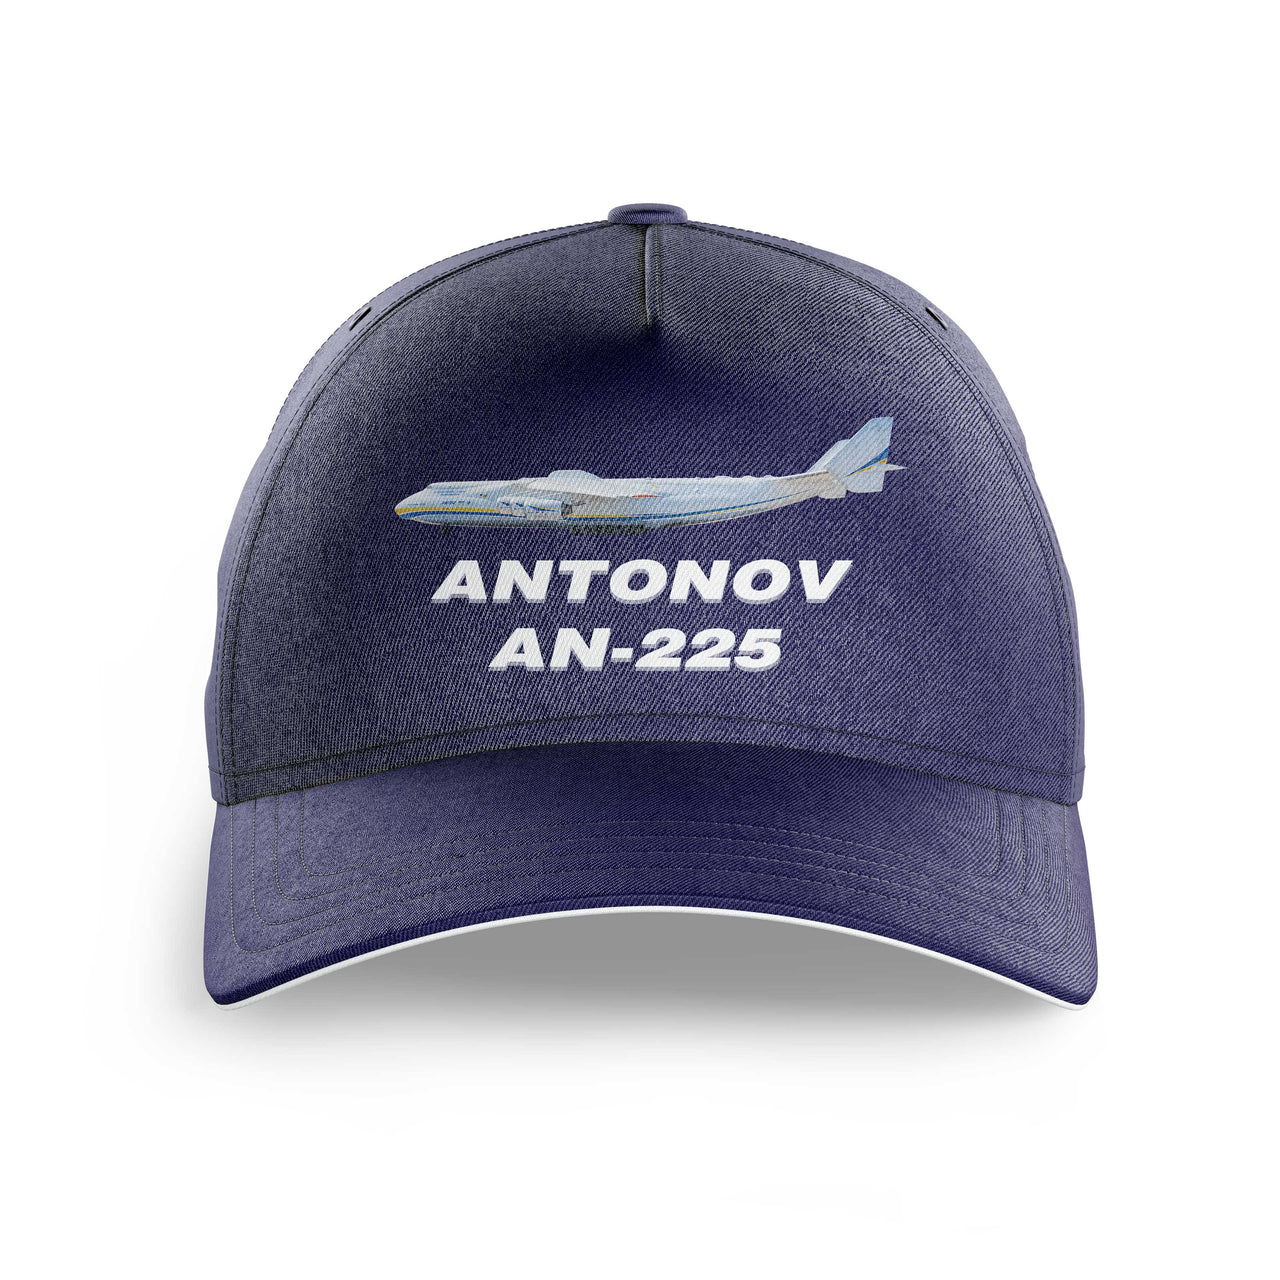 The Antonov AN-225 Printed Hats